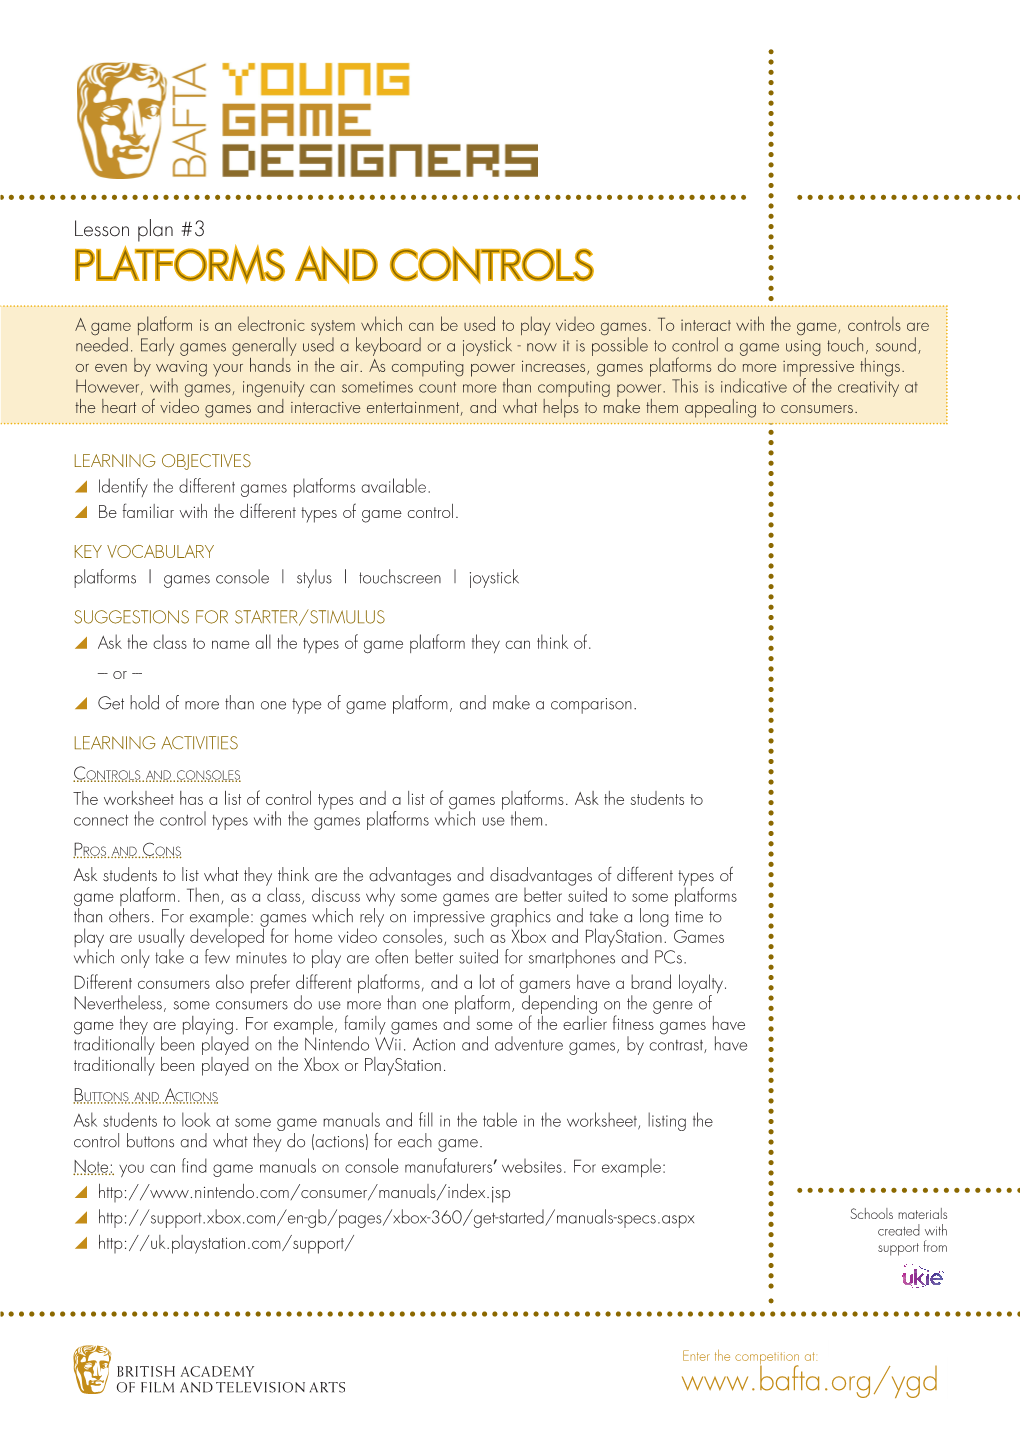 Platforms and Controls